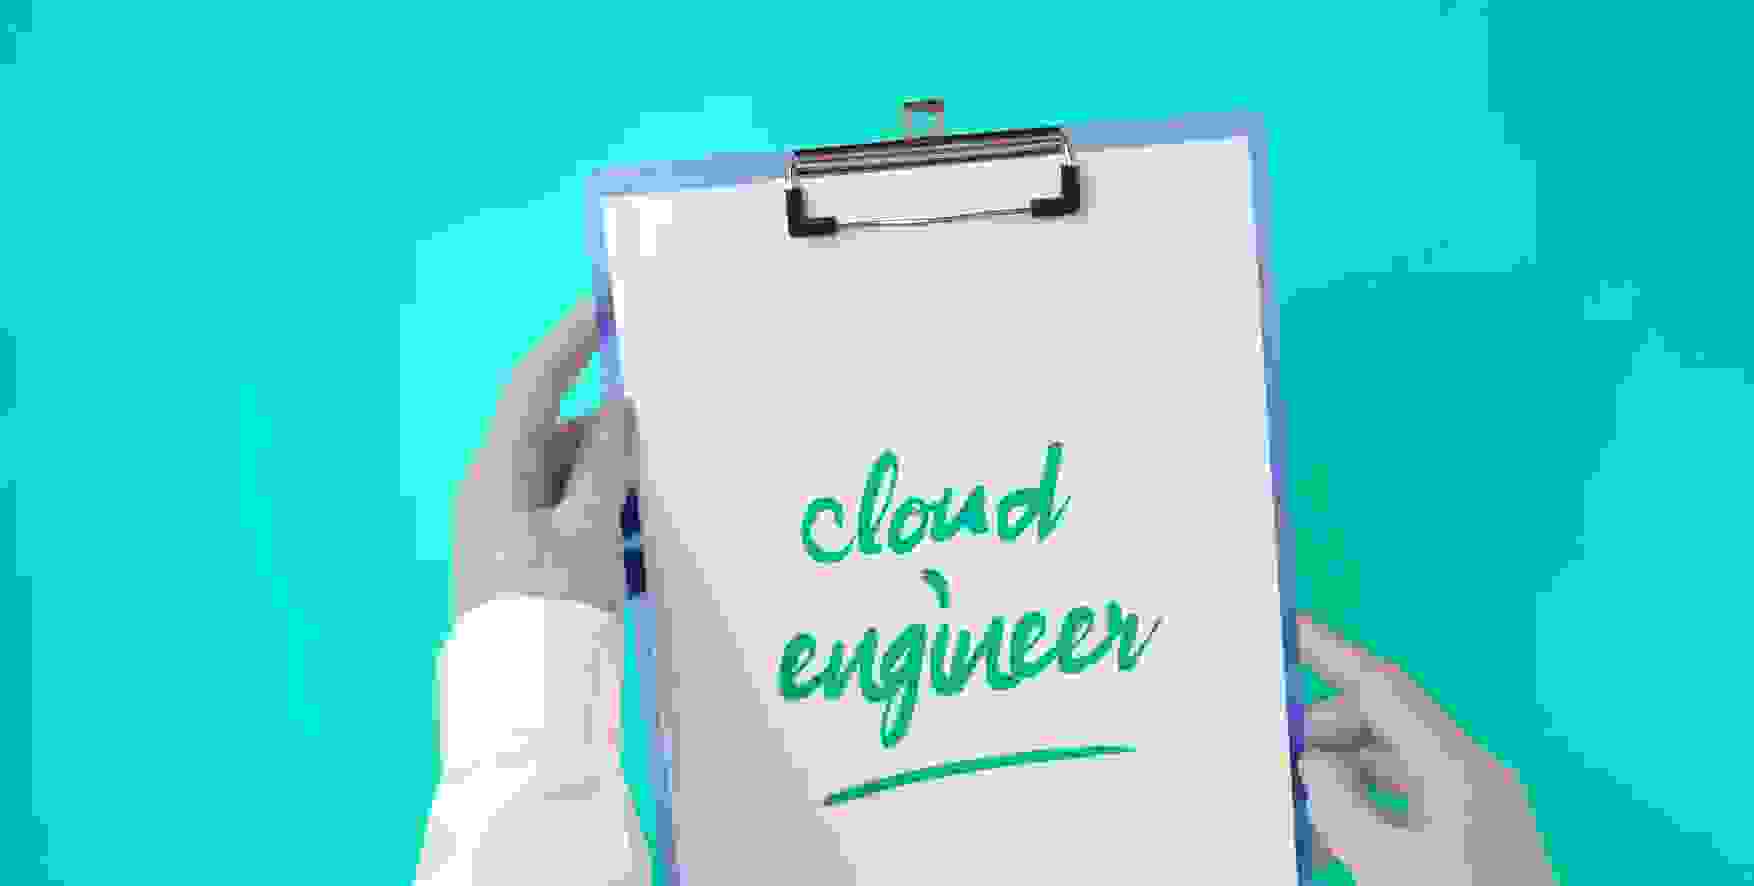 cloud engineer written on a piece of paper in a clipboard